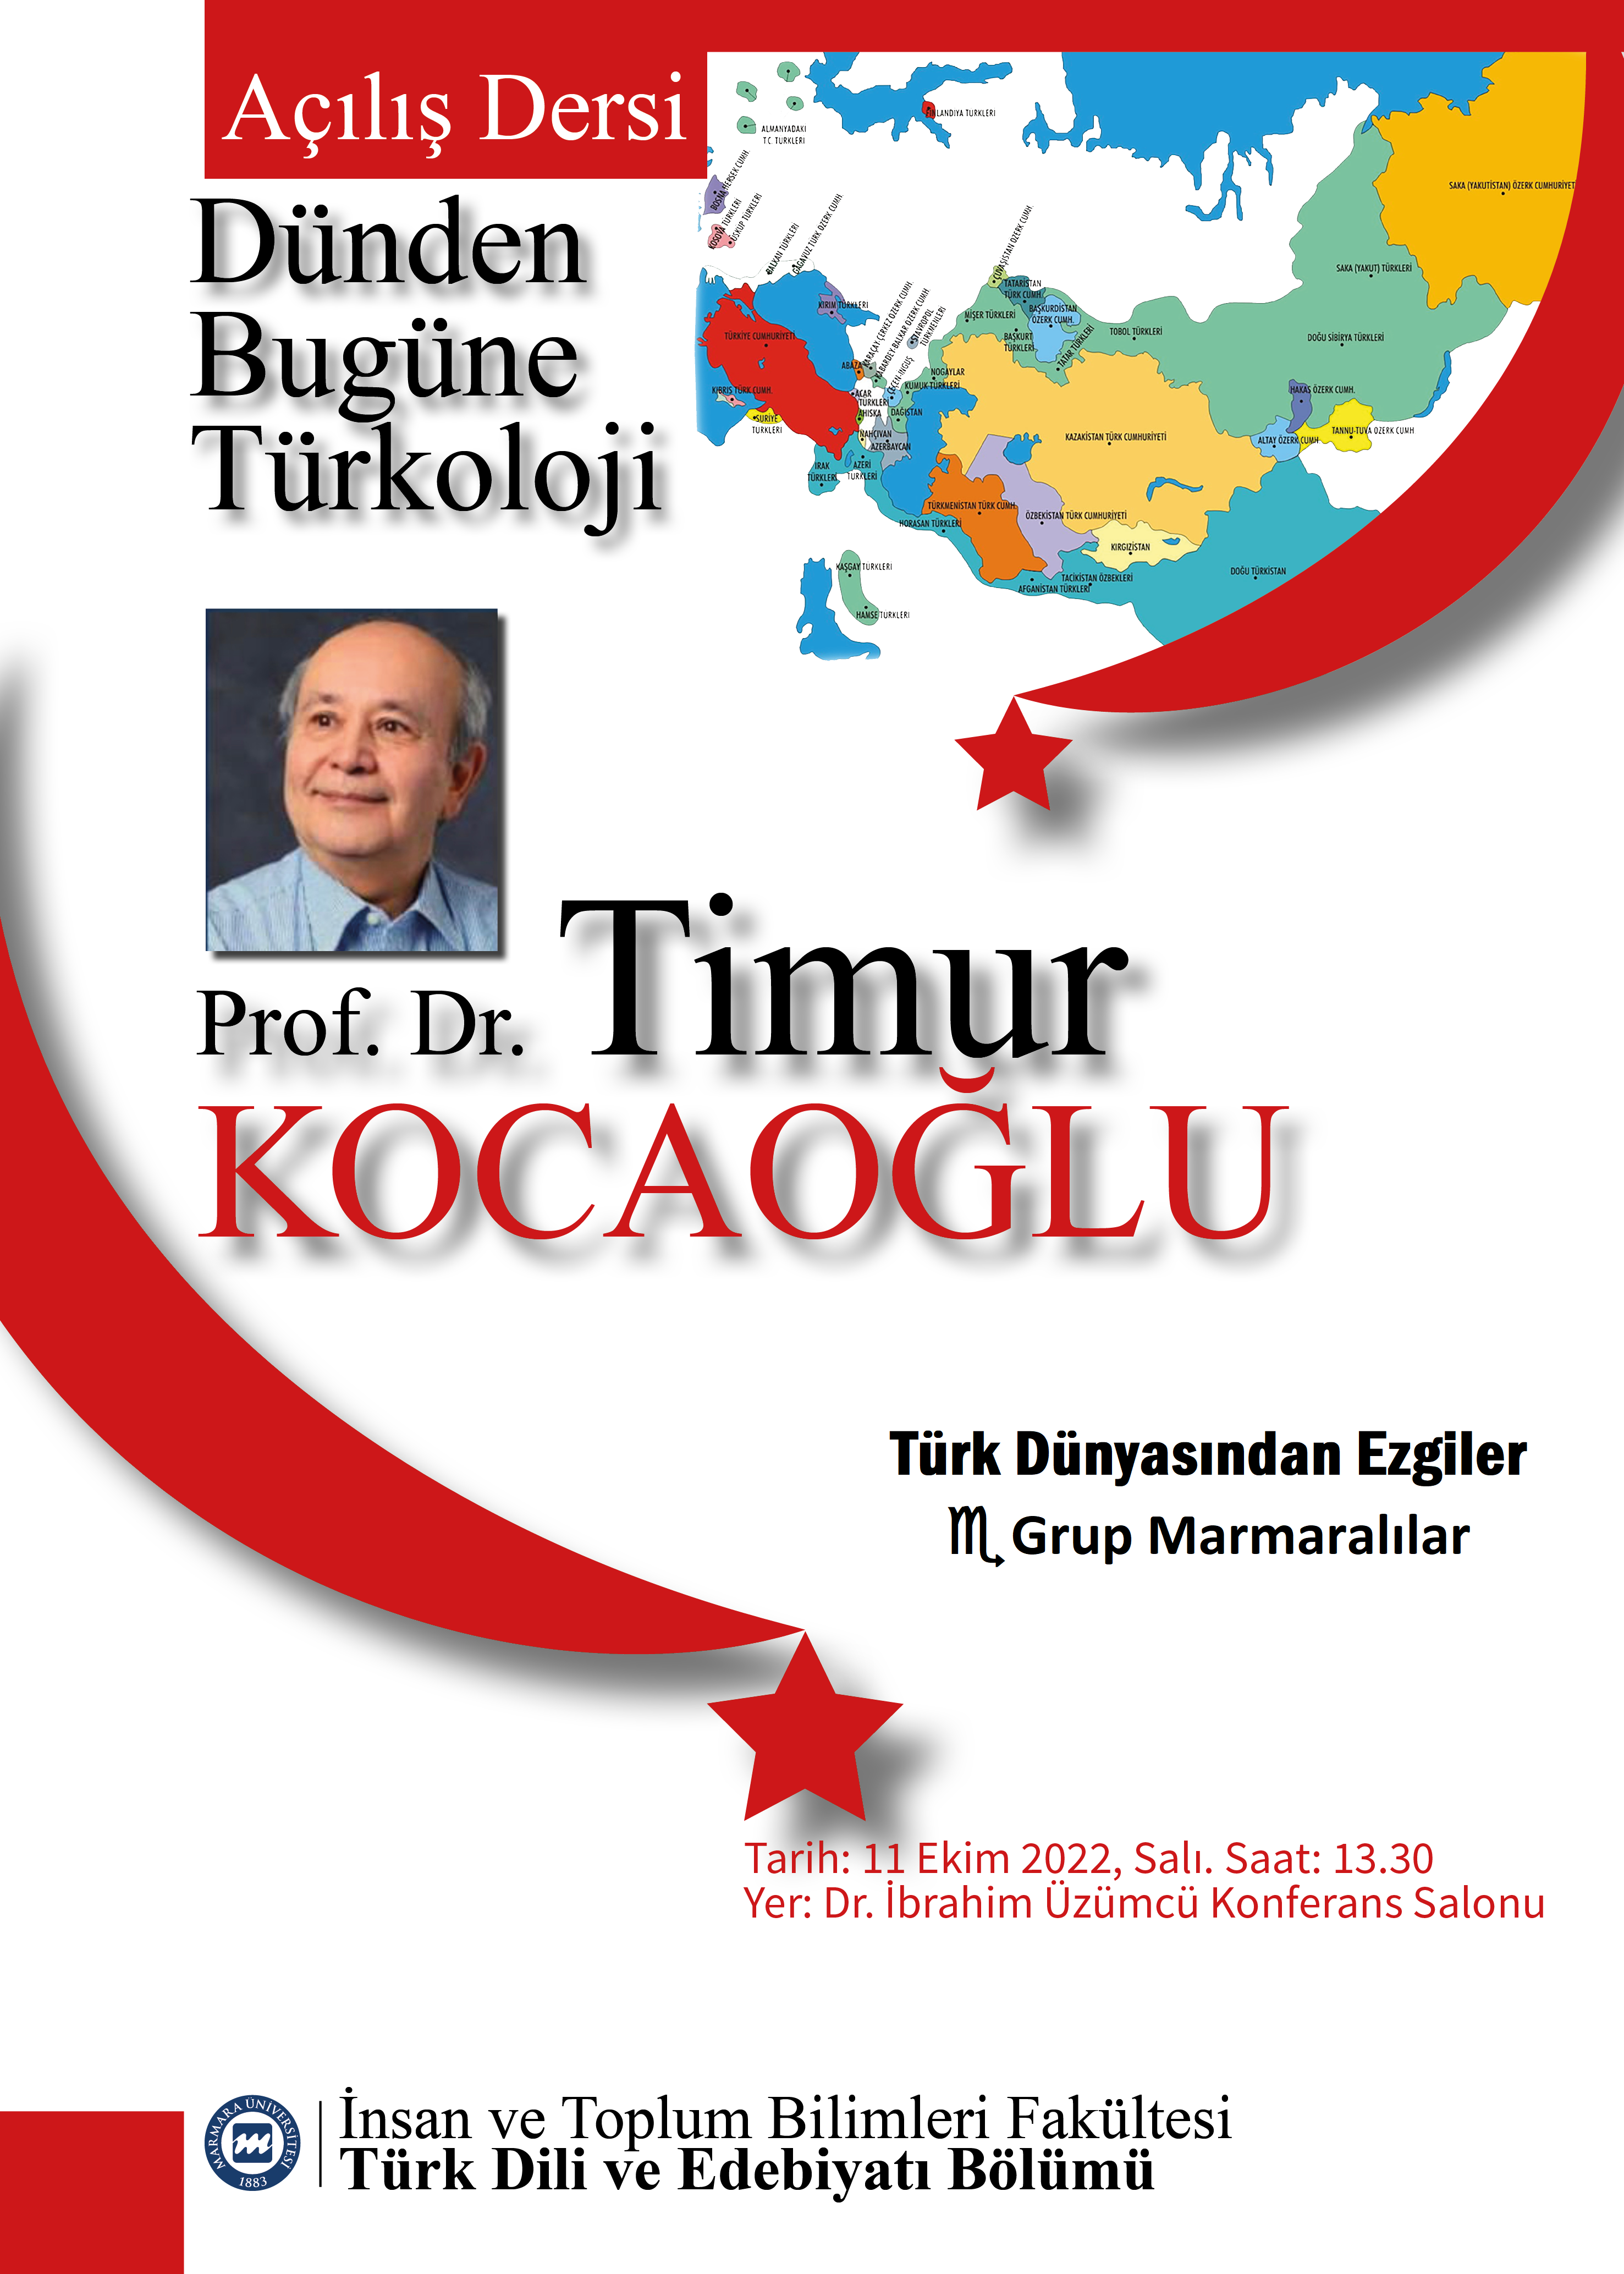 TurkolojiAfis.png (2.26 MB)